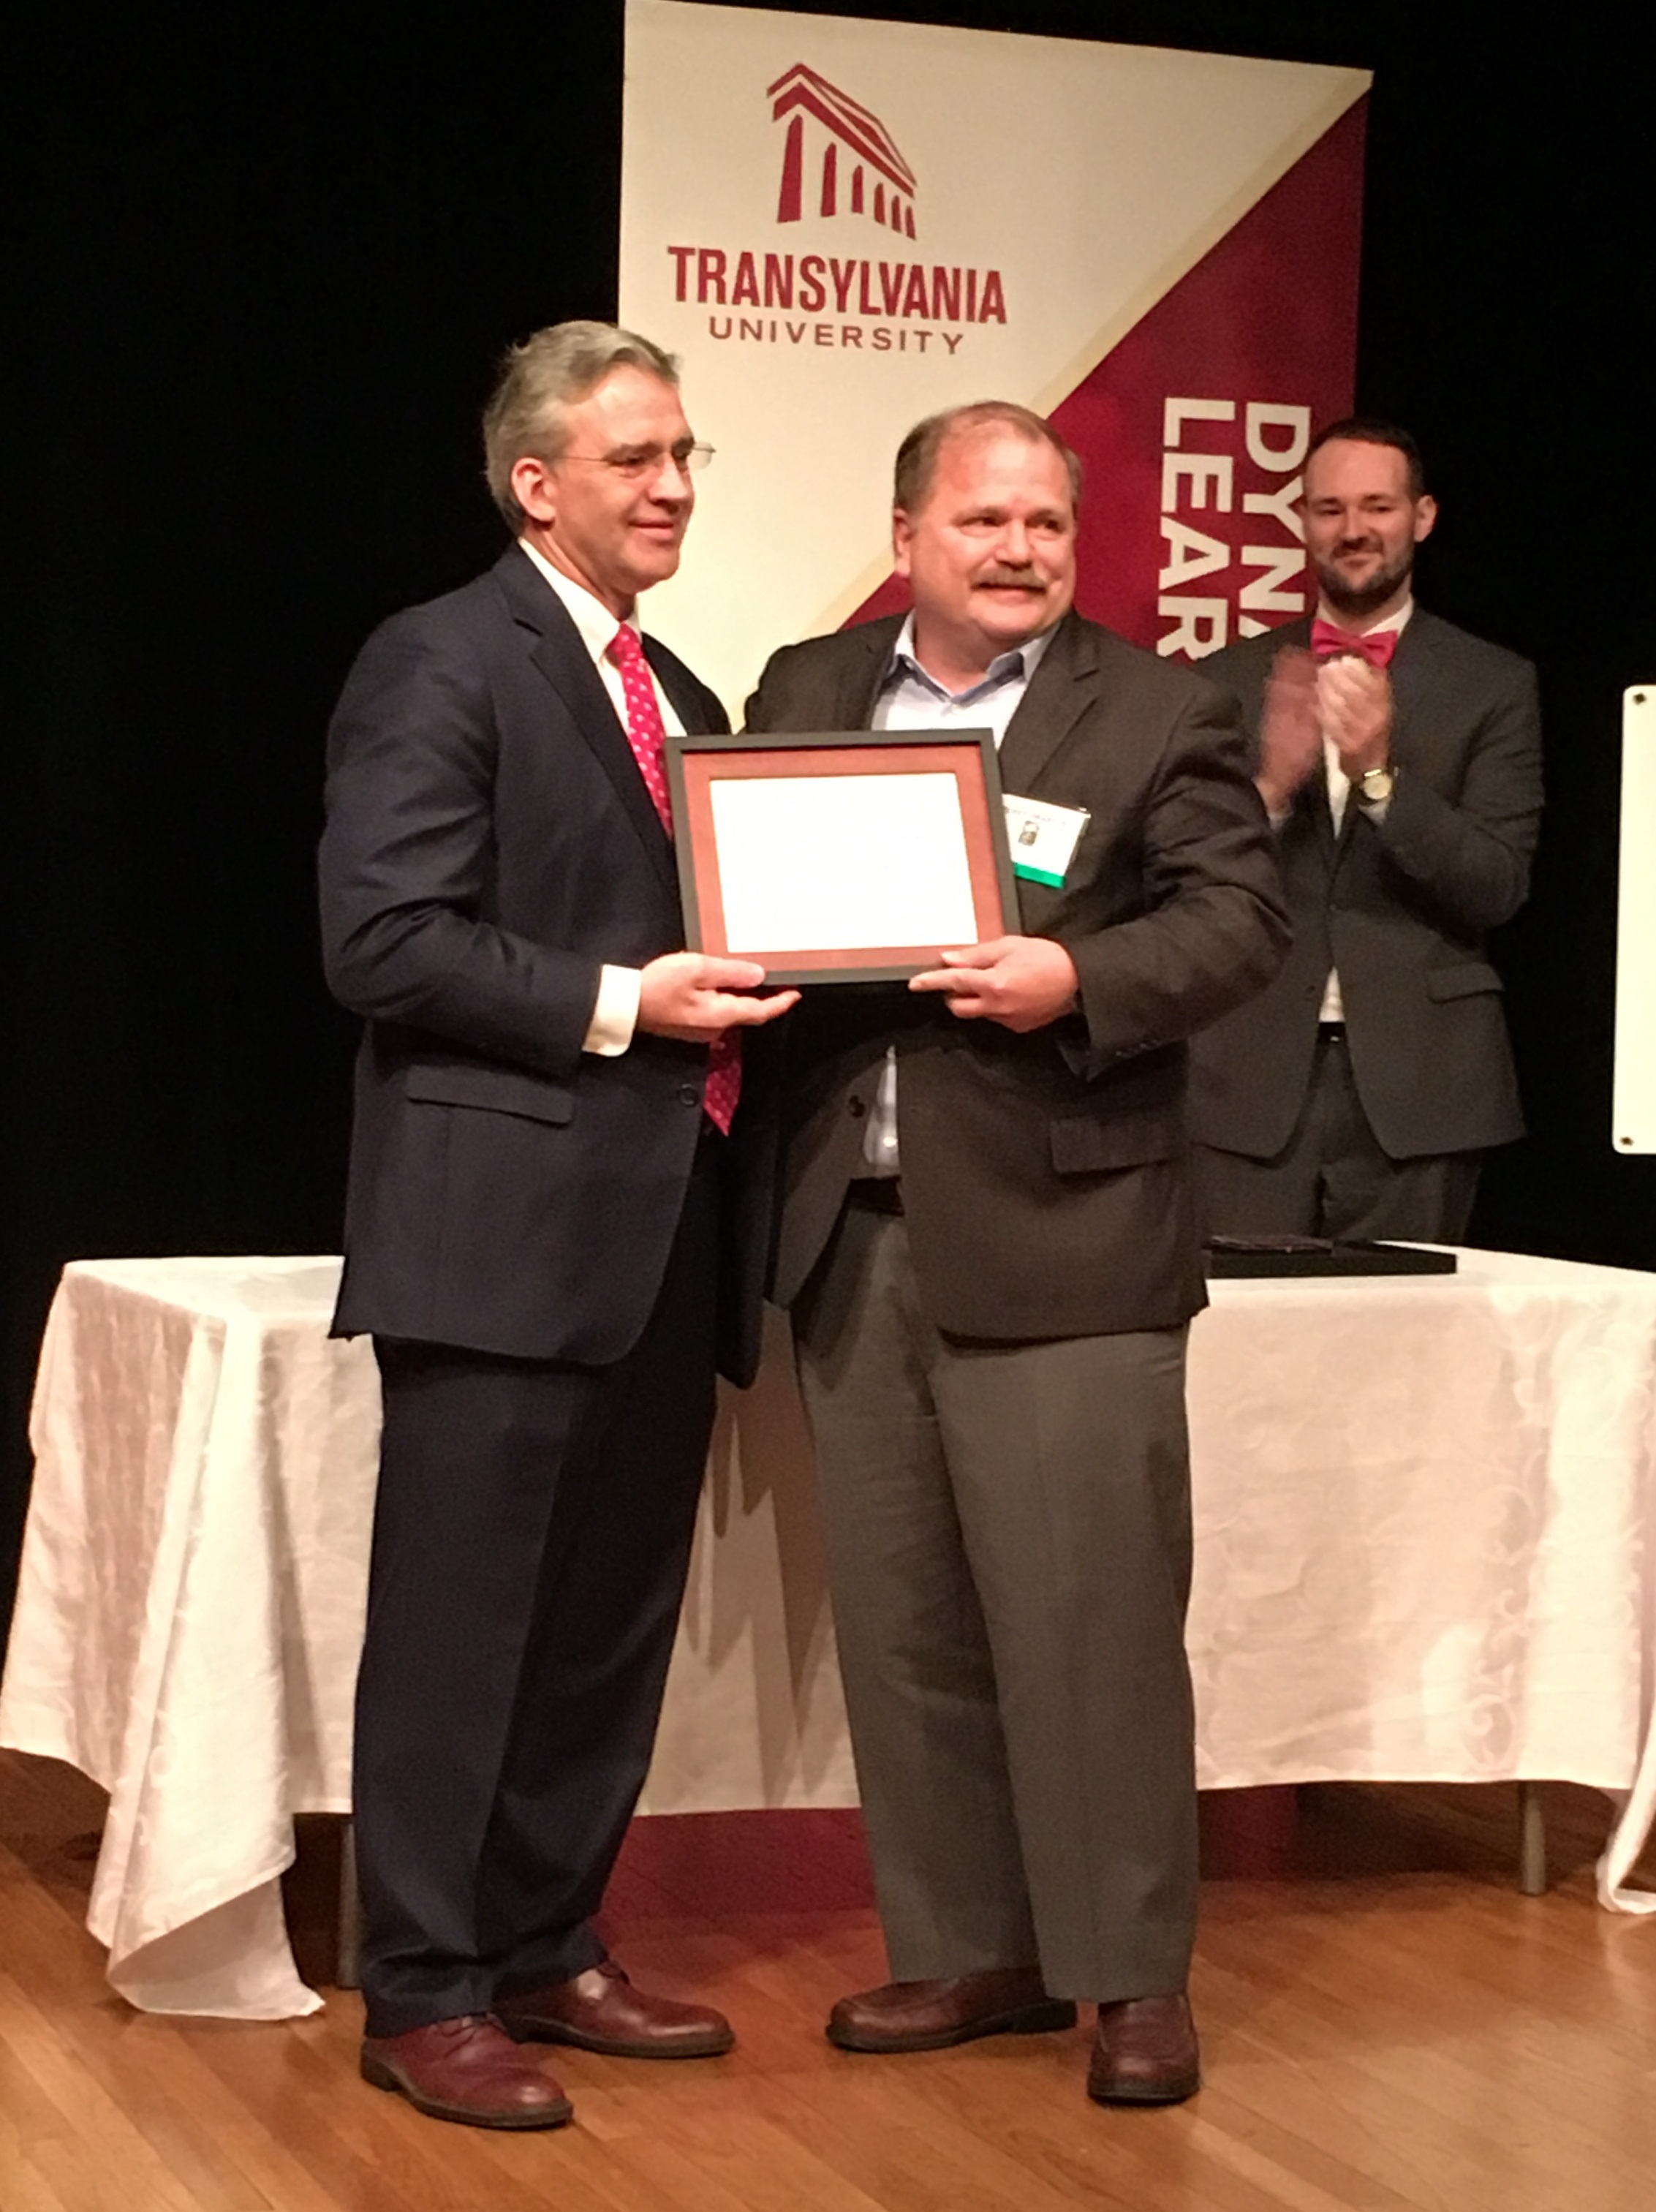 Grant receives high honor from Transylvania University